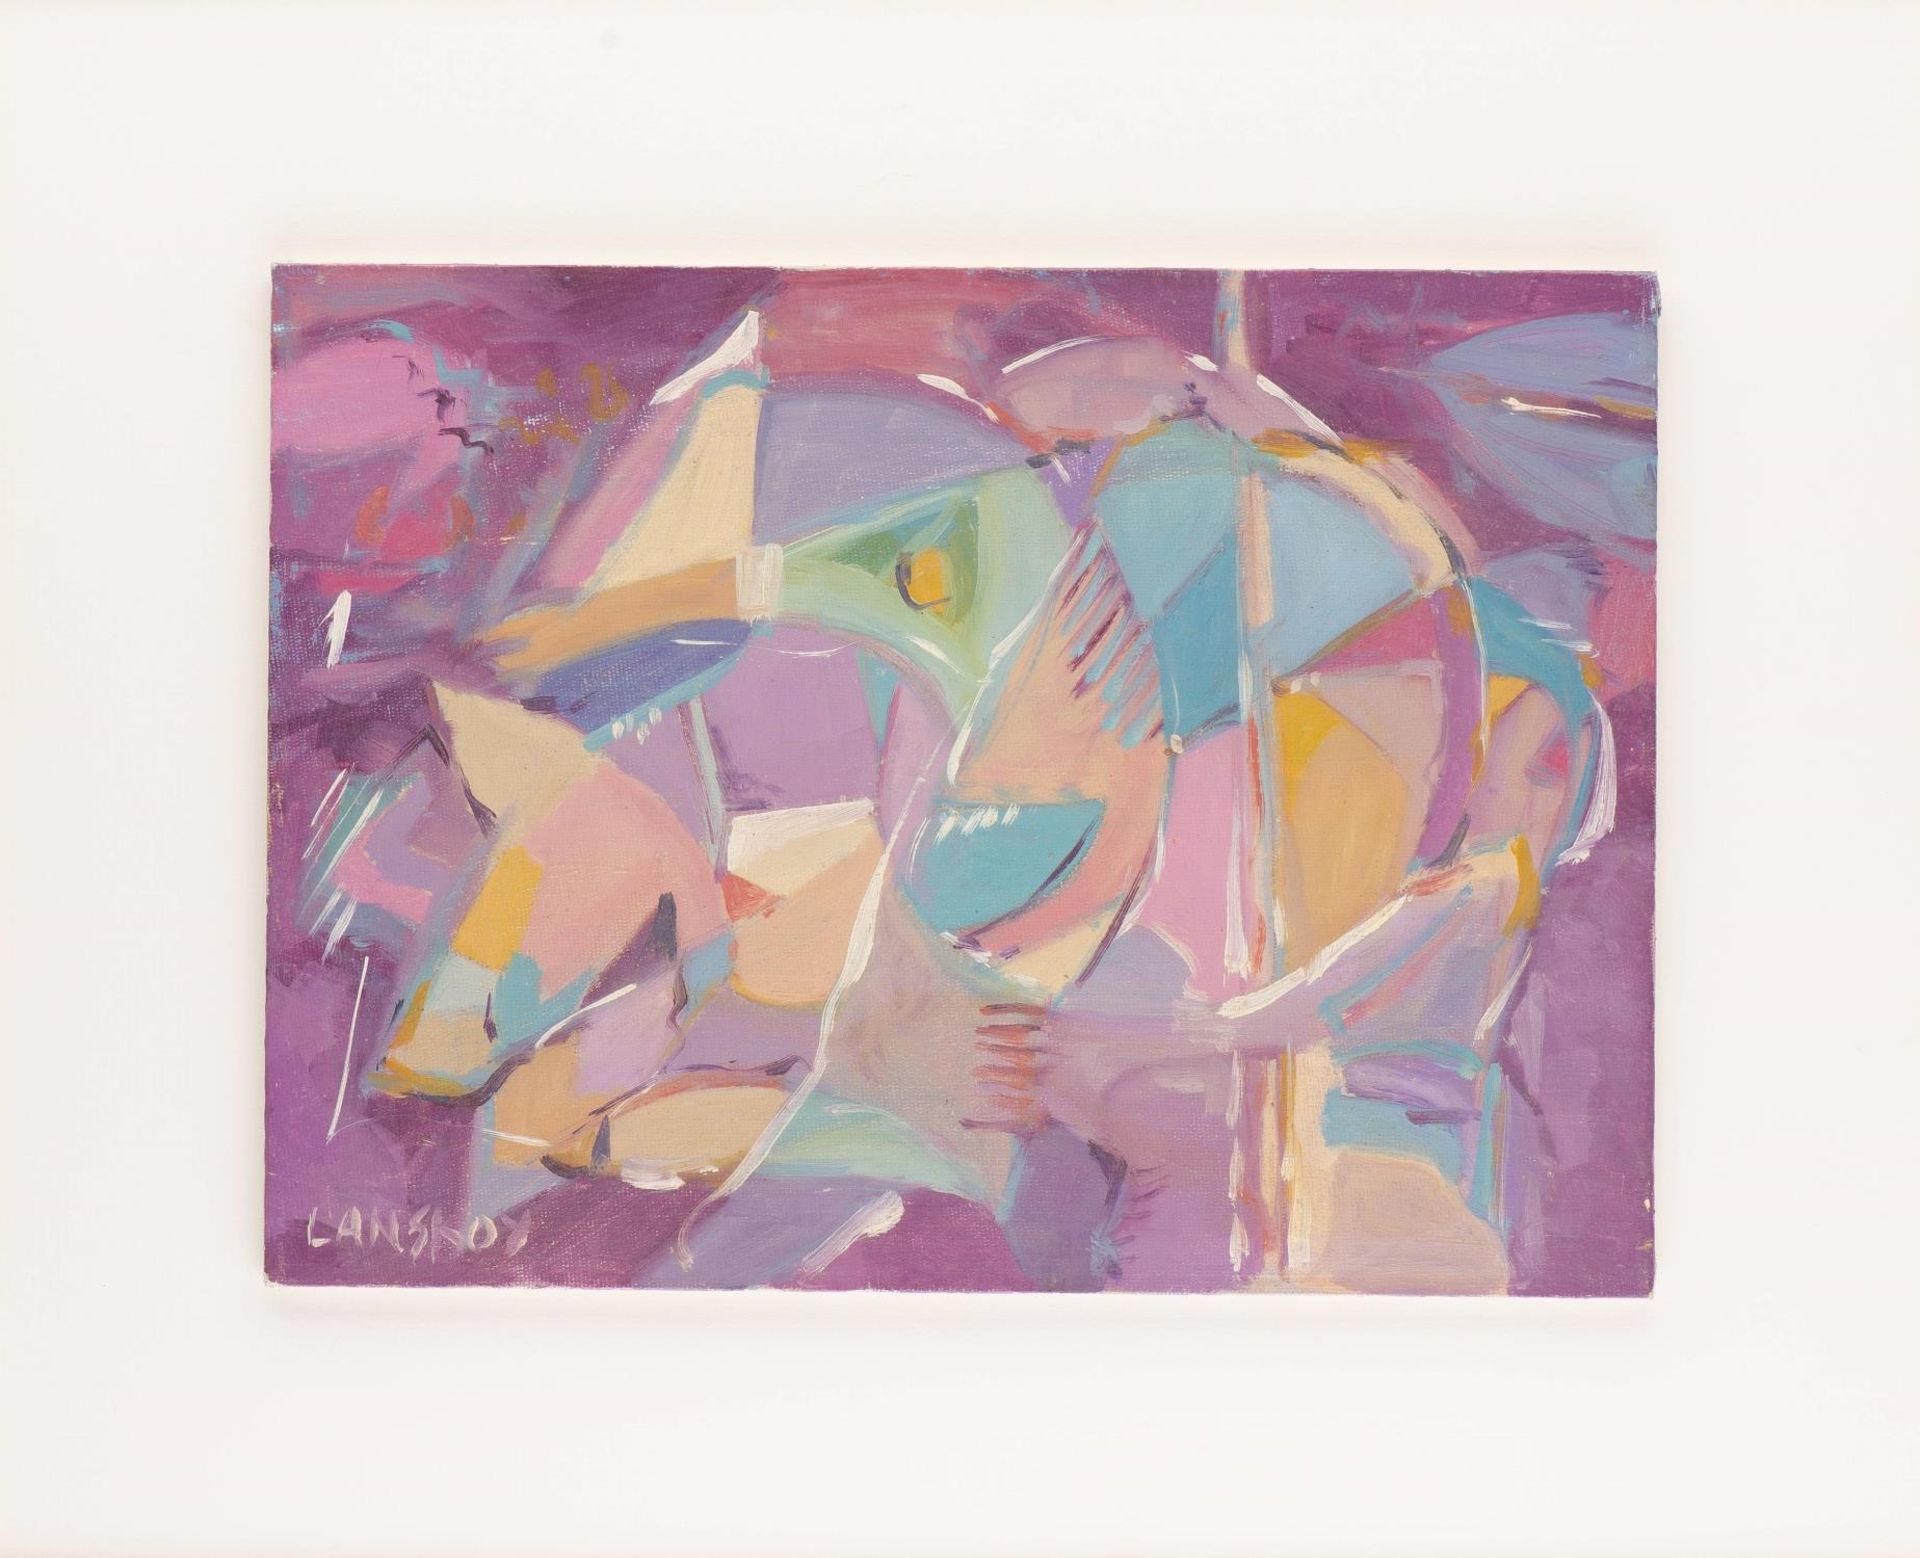 André Lanskoy (1902 - 1976), "Composition abstraite"